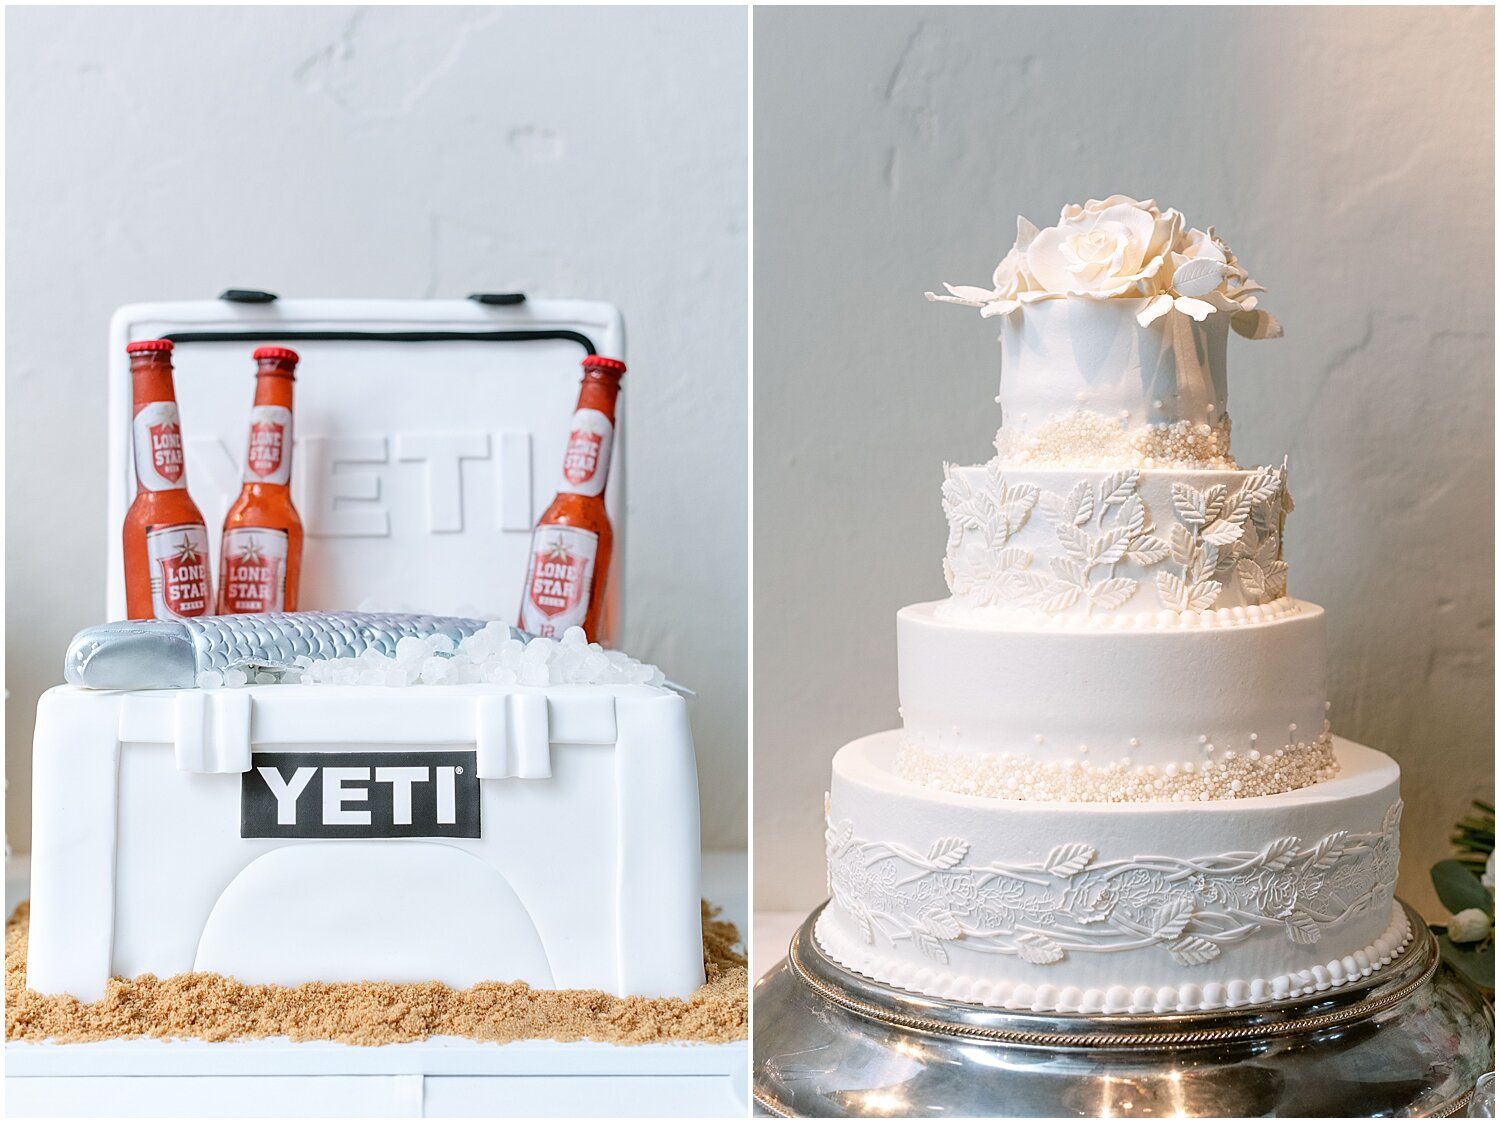  White wedding cake and Yeti themed groom cake 